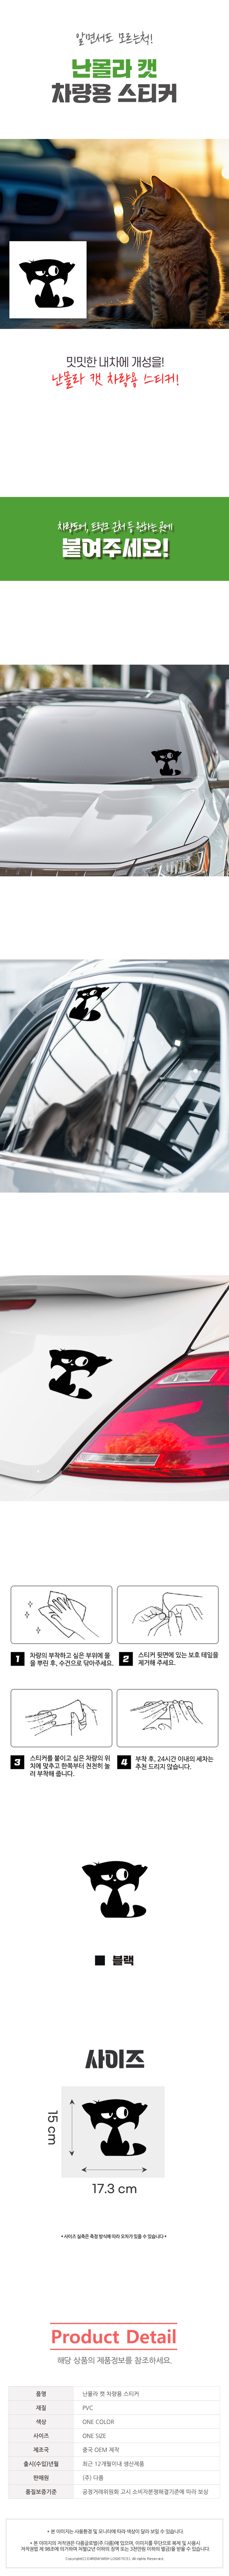 I_dont_know_cat_car_sticker_detail.jpg